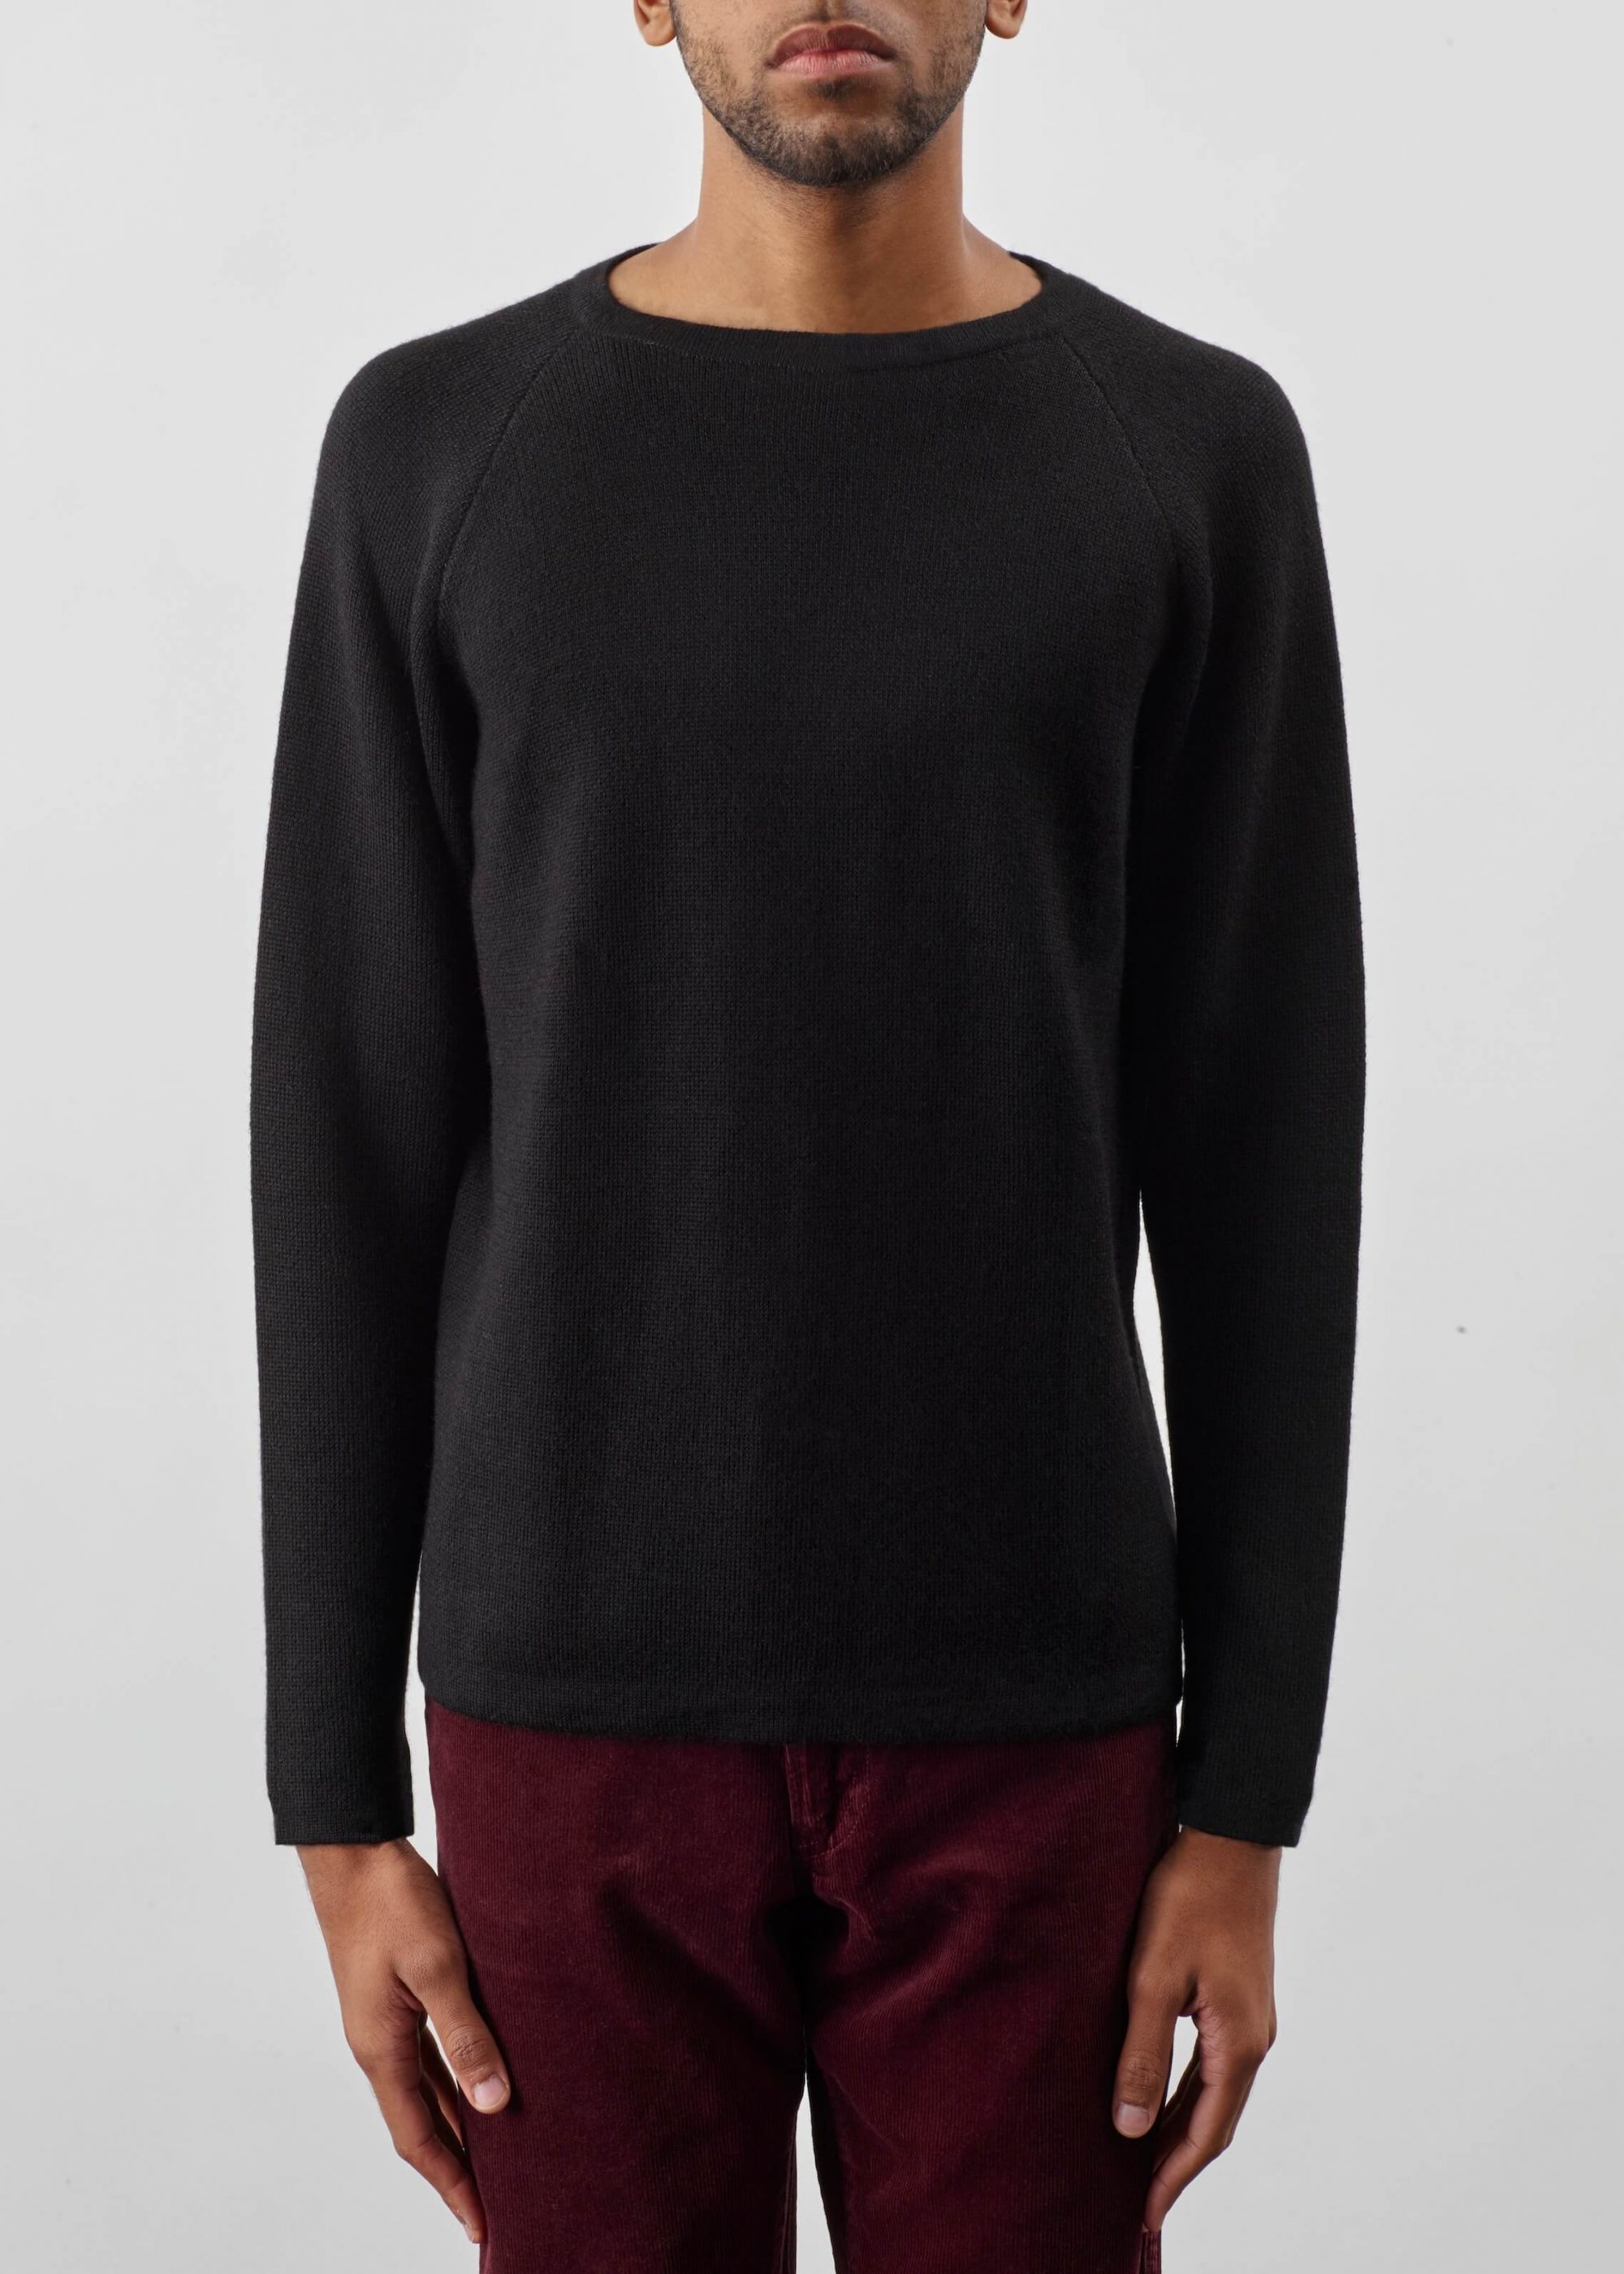 Product image for »Dean« Raglan Sweater Baby Alpaca | Black